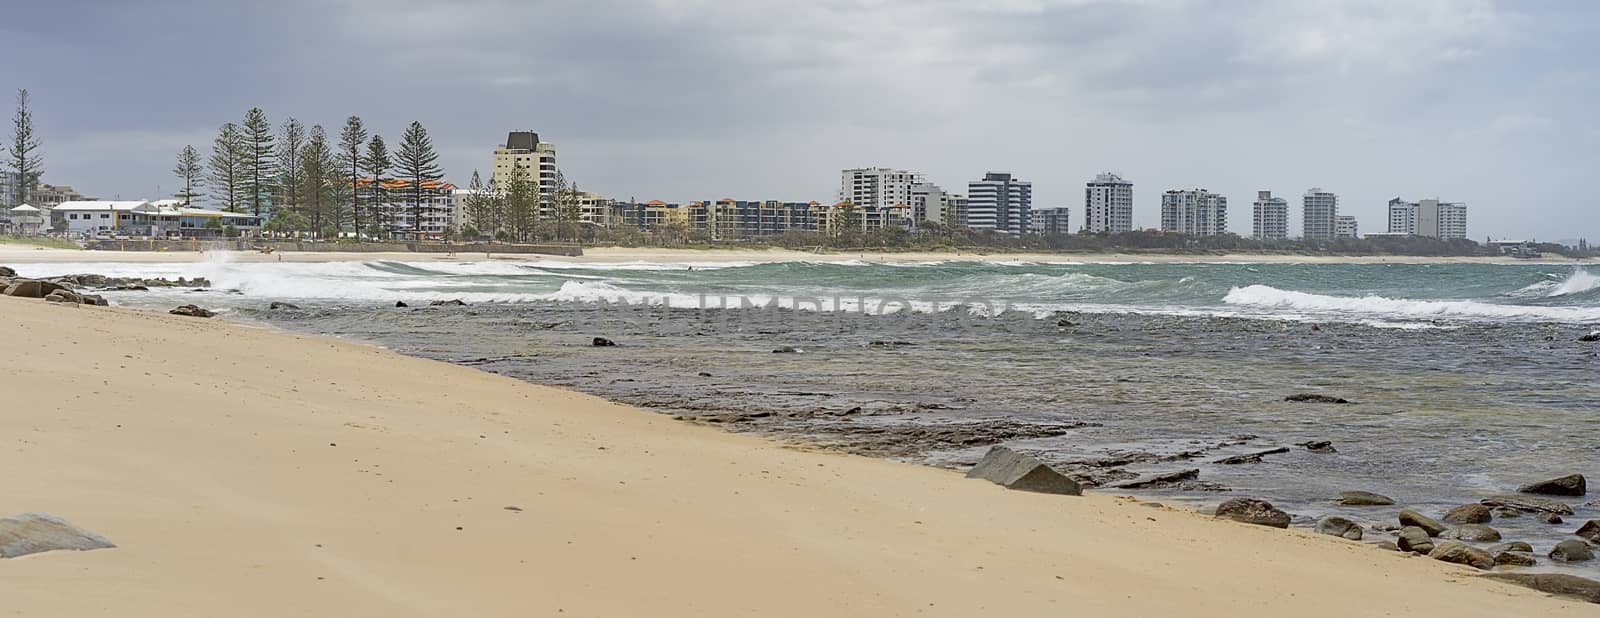 Australian panorama Sunshine Coast seafront by sherj